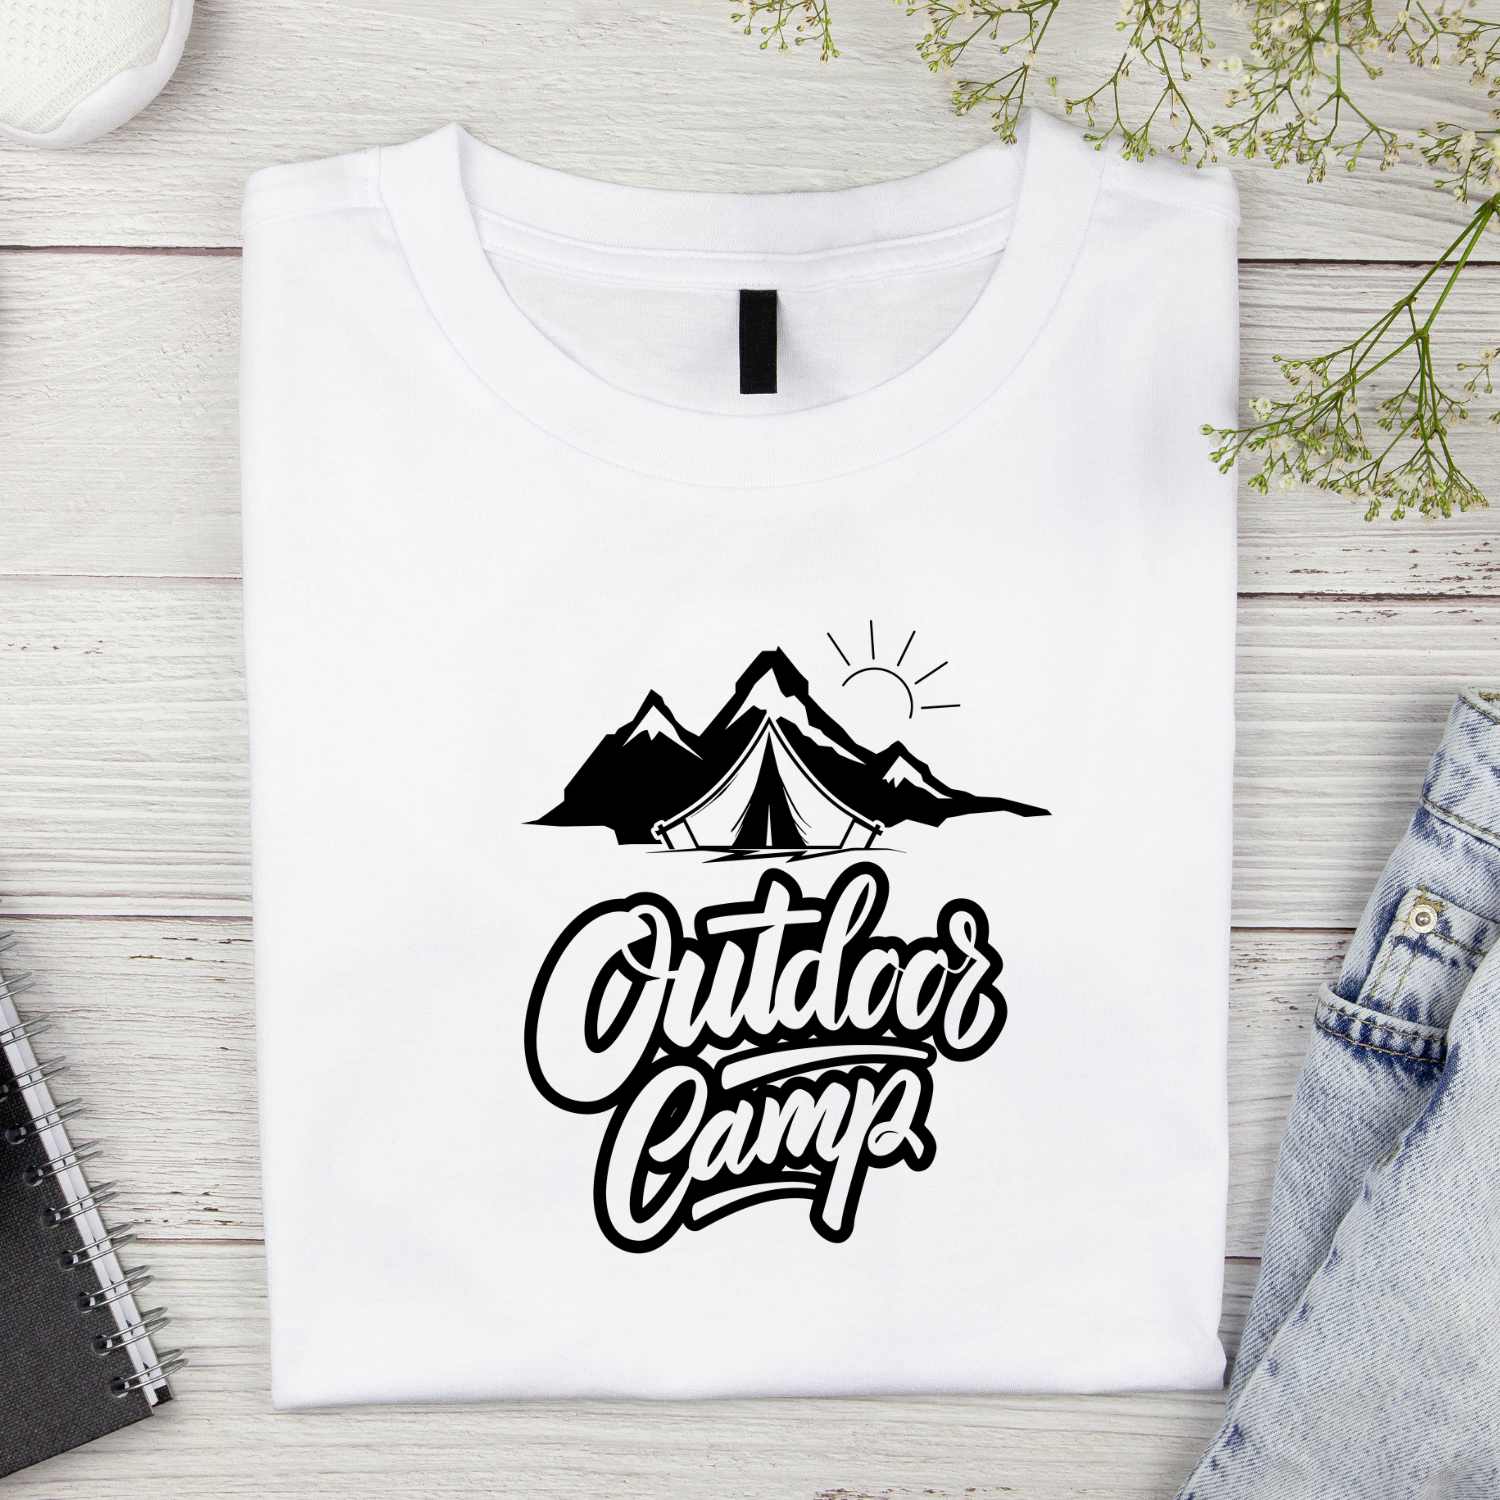 Outdoor Camp T-shirt Design